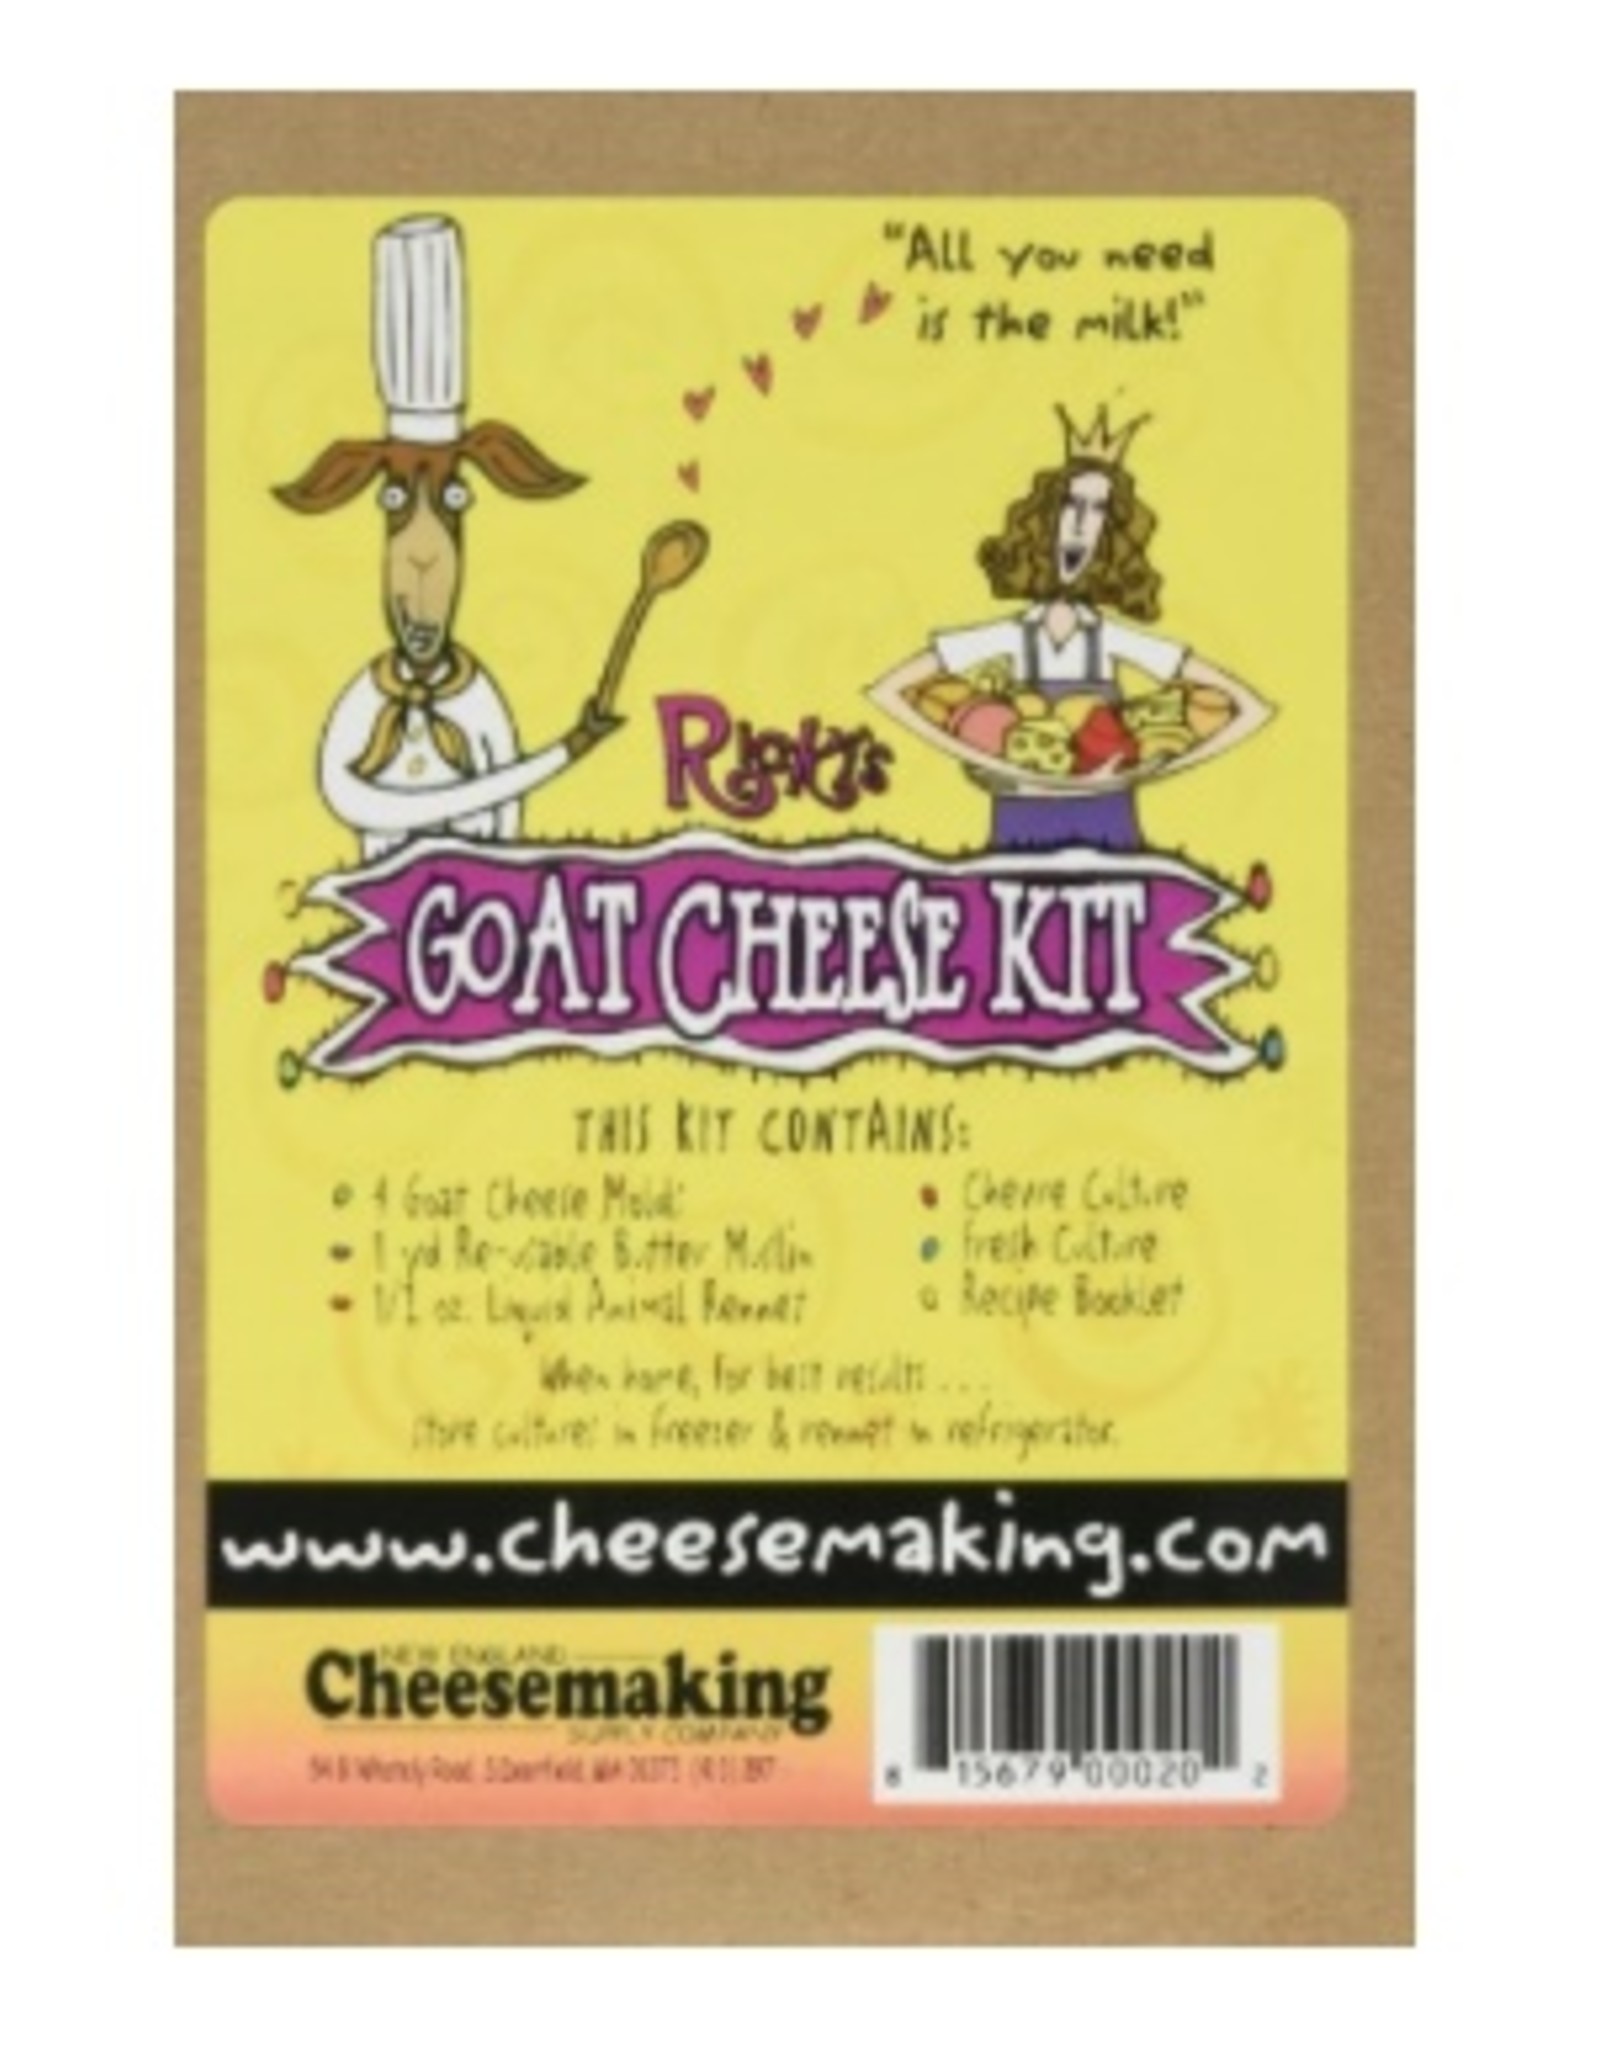 Ricki Goat Cheese Kit